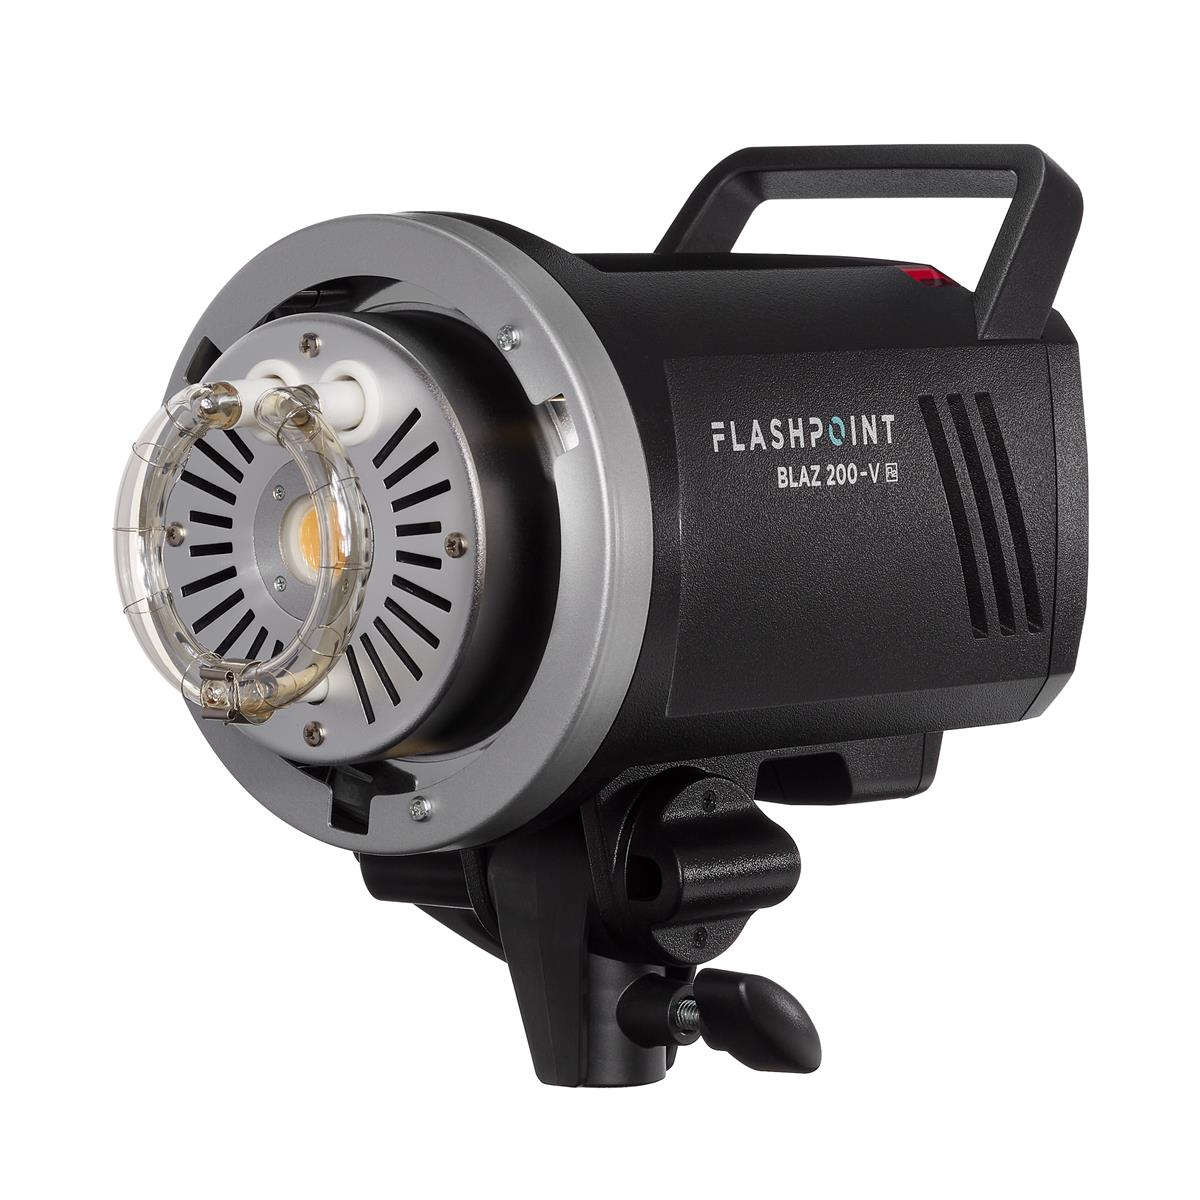 Image of Flashpoint BLAZ 200-V 200W R2 Studio Monolight Flash w/10W LED Lamp